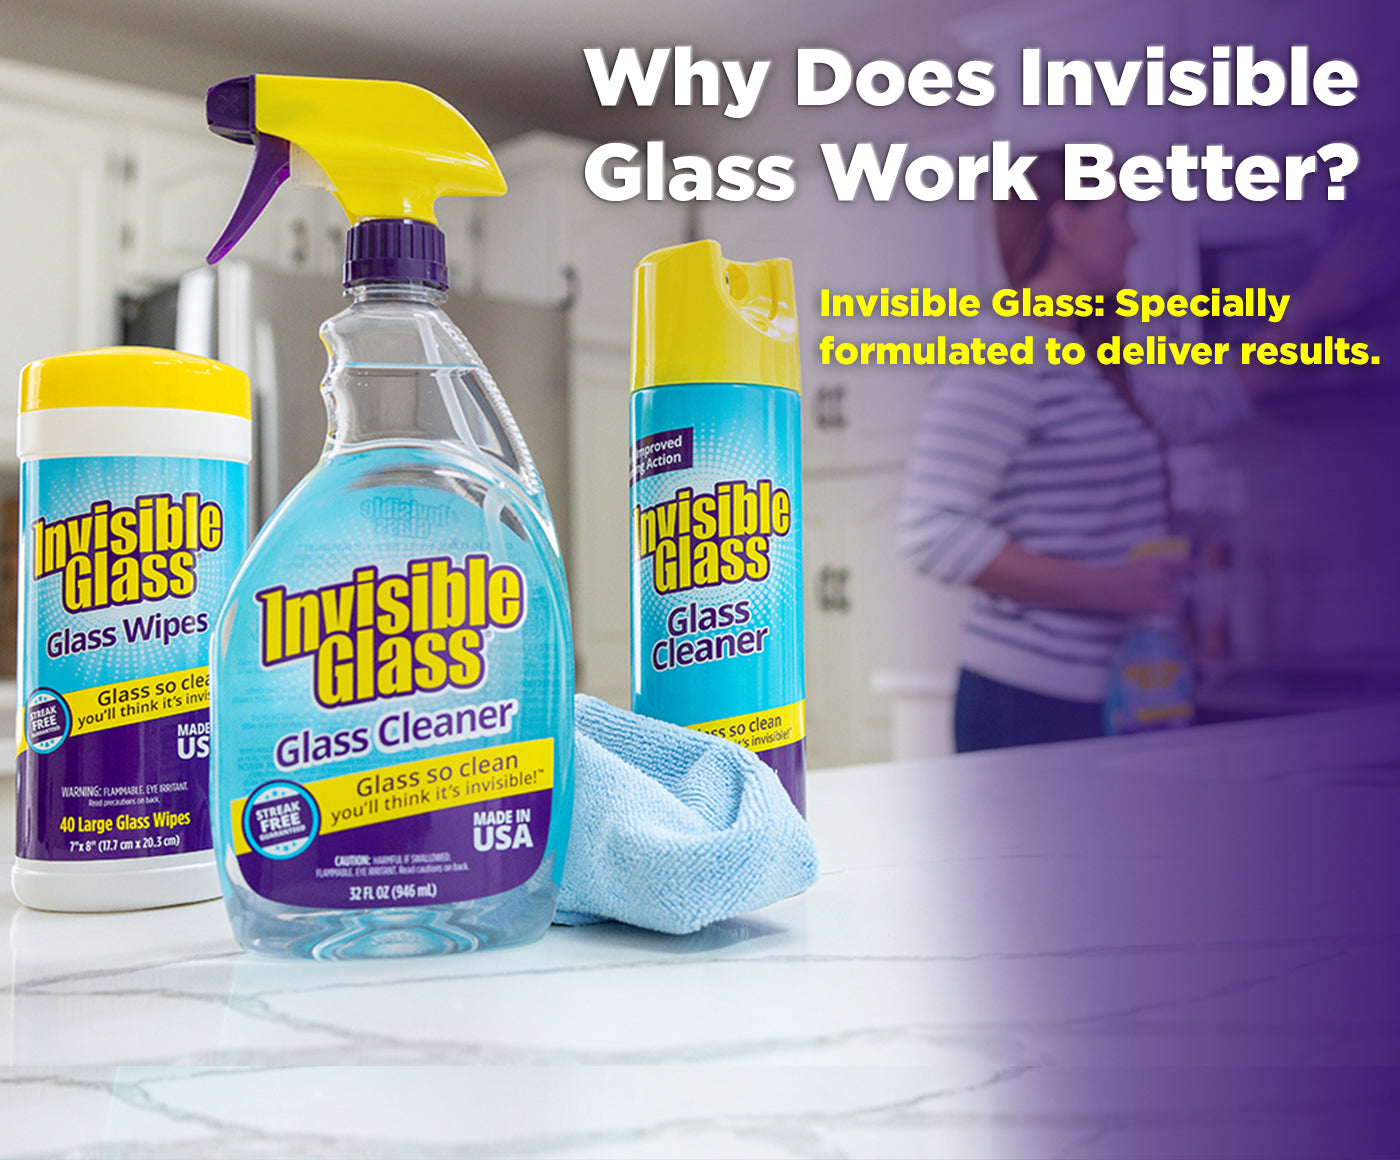 Stoner Invisible Glass - 19 oz Premium Glass Cleaner